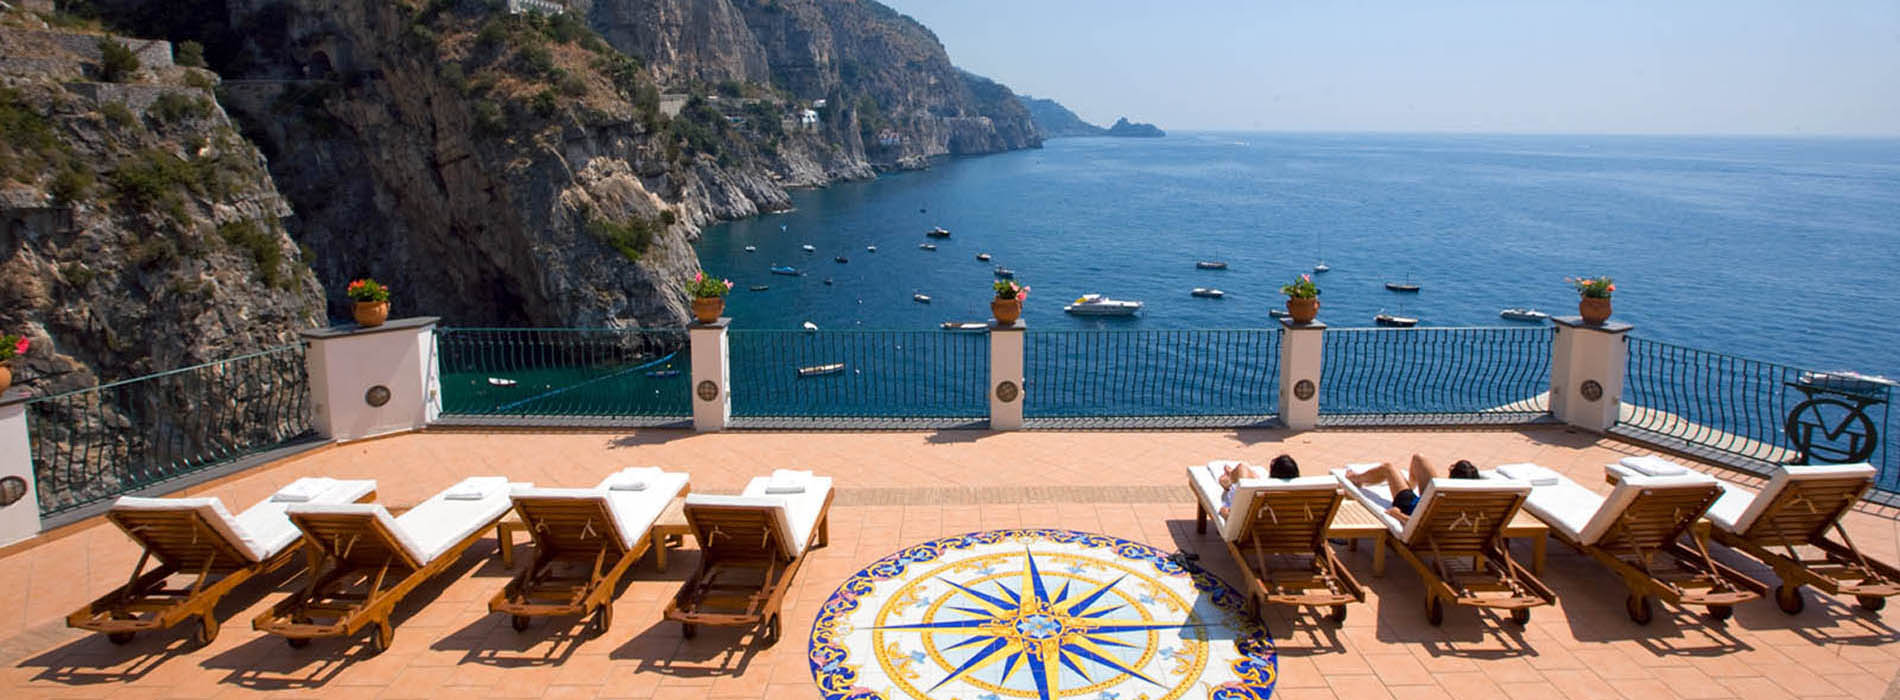 Hotel Onda Verde - Amalfi Coast